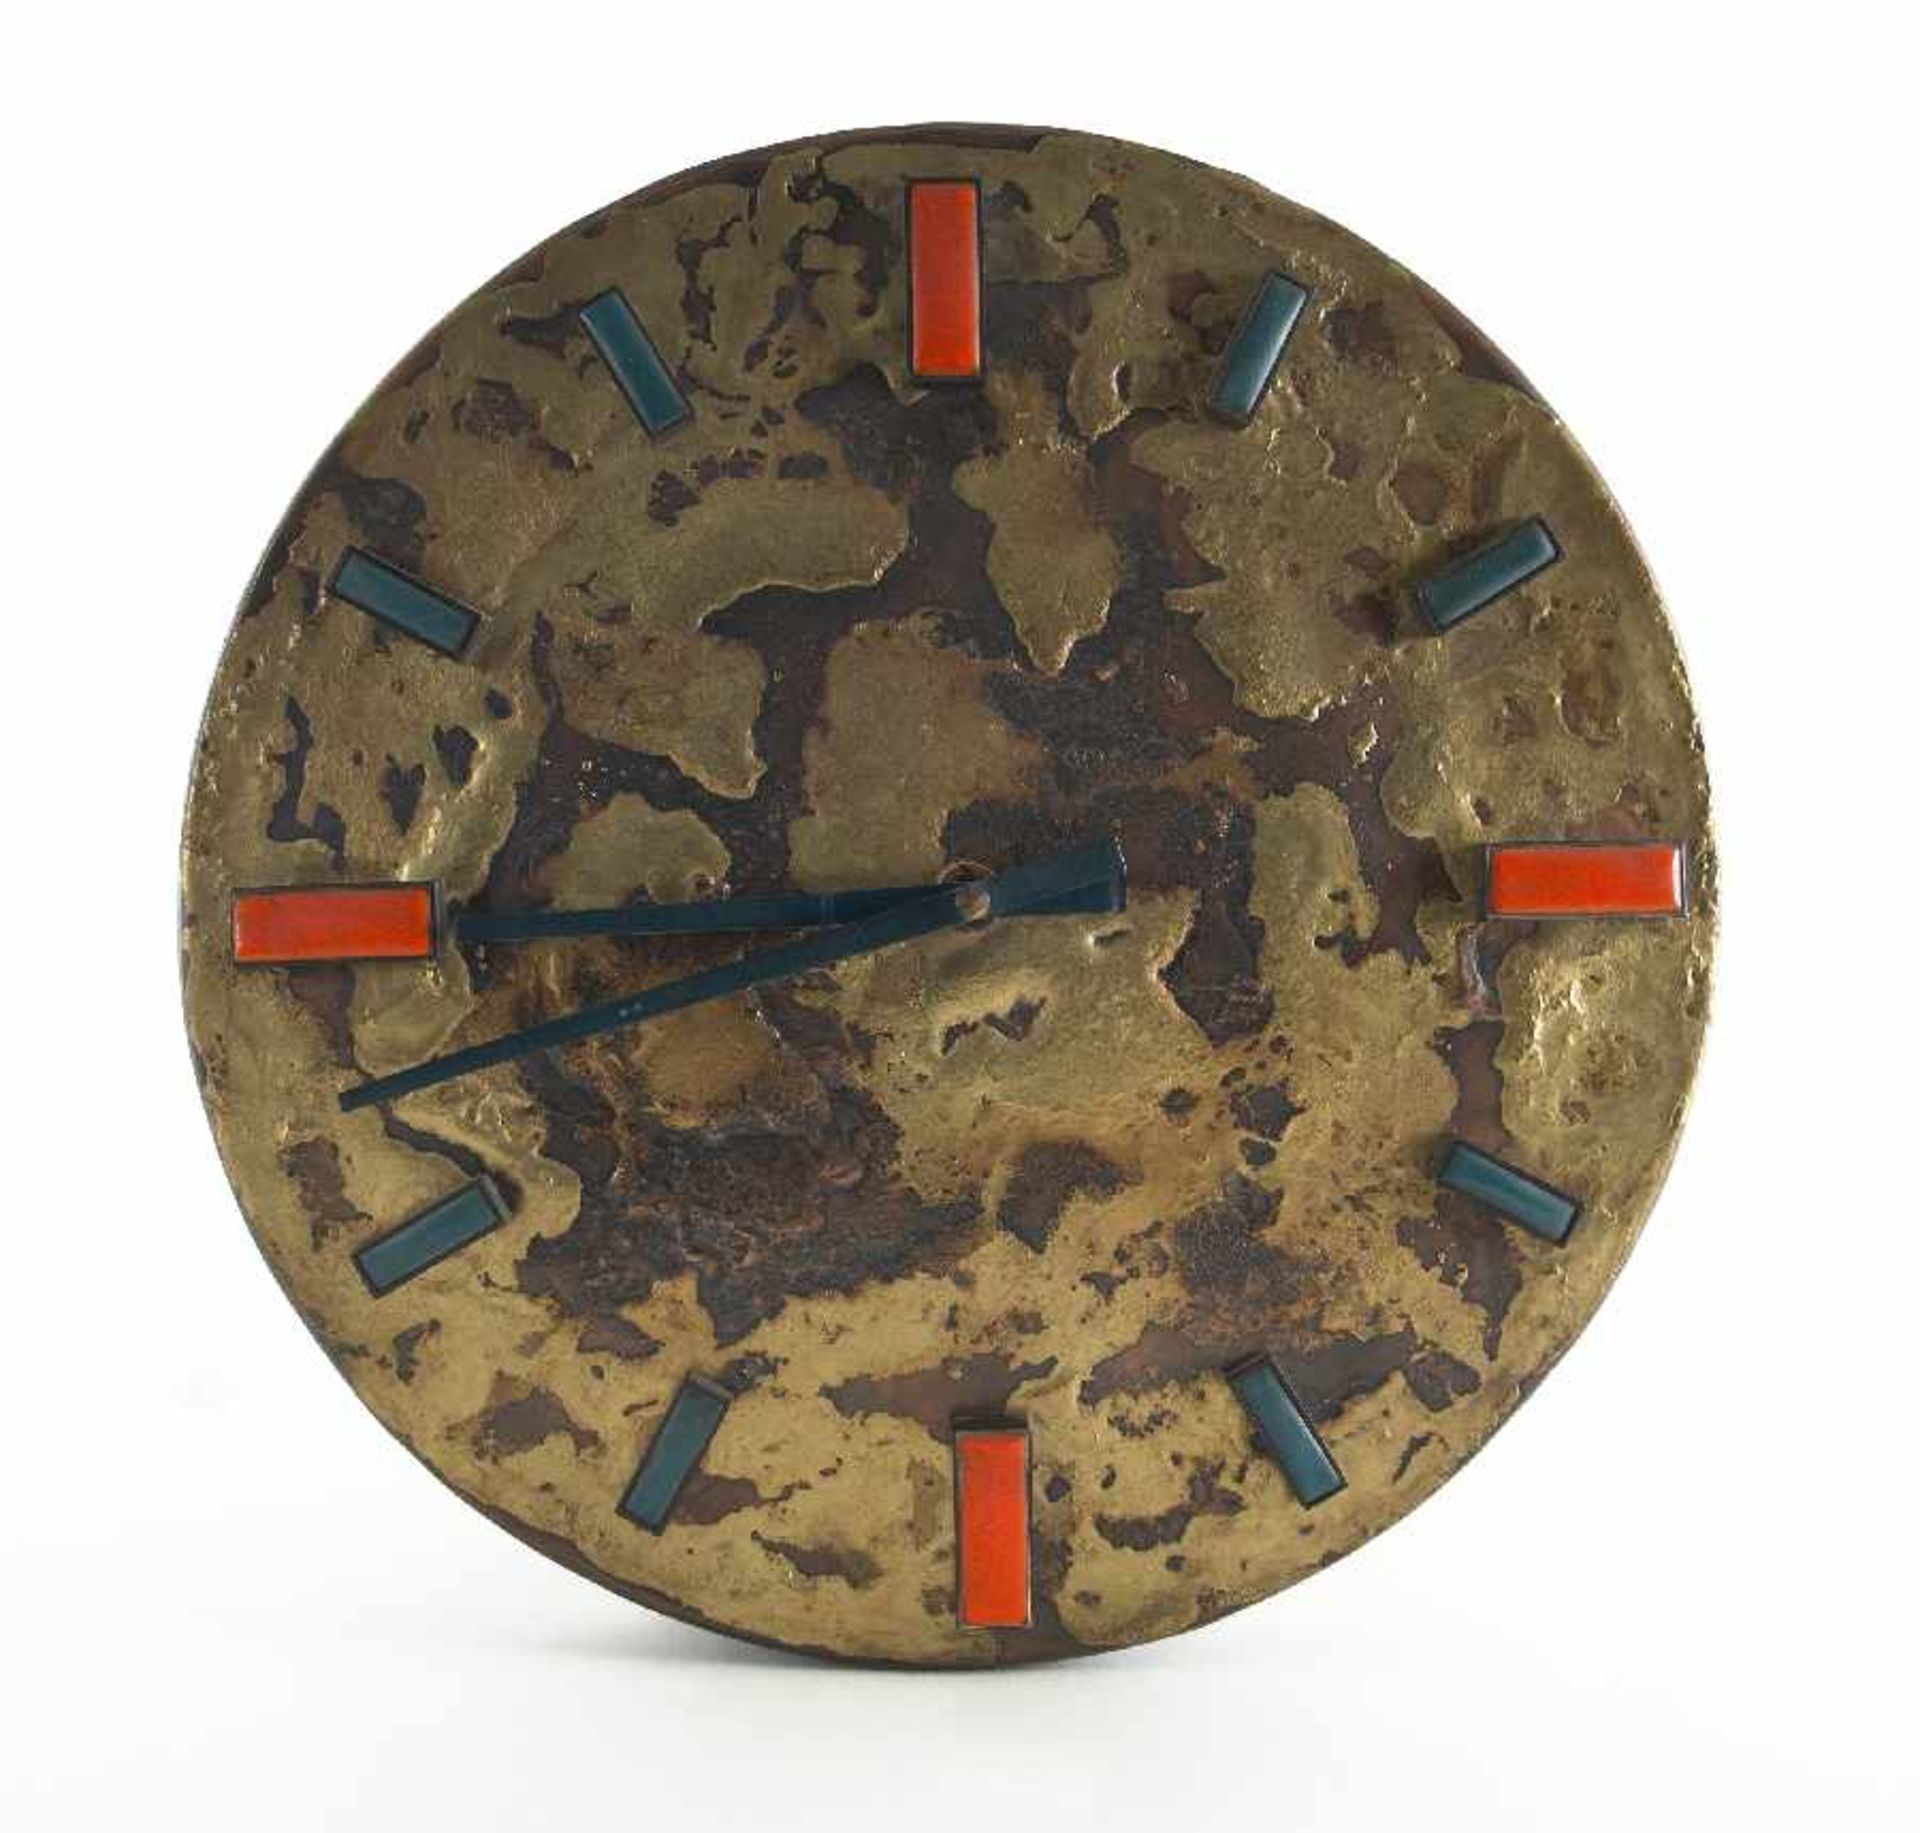 Hubert TeschladeMünster 1921 - 2014Wall clockCopper, brass enamel figures, lacquered metal hands;